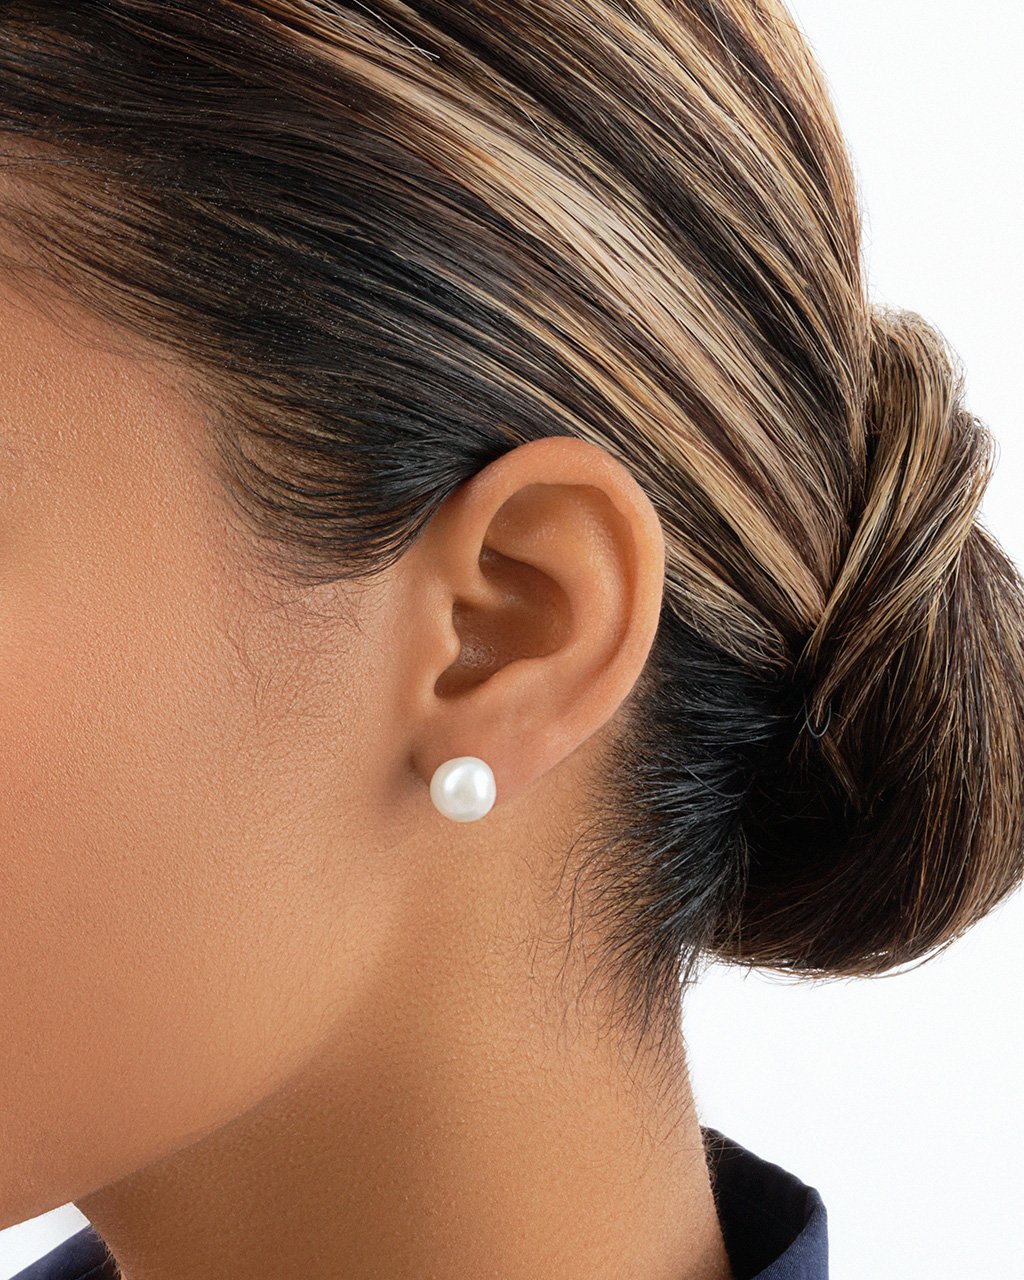 Gold and Pearl Earrings - Gold Earrings - Faux Pearl Earrings - Lulus